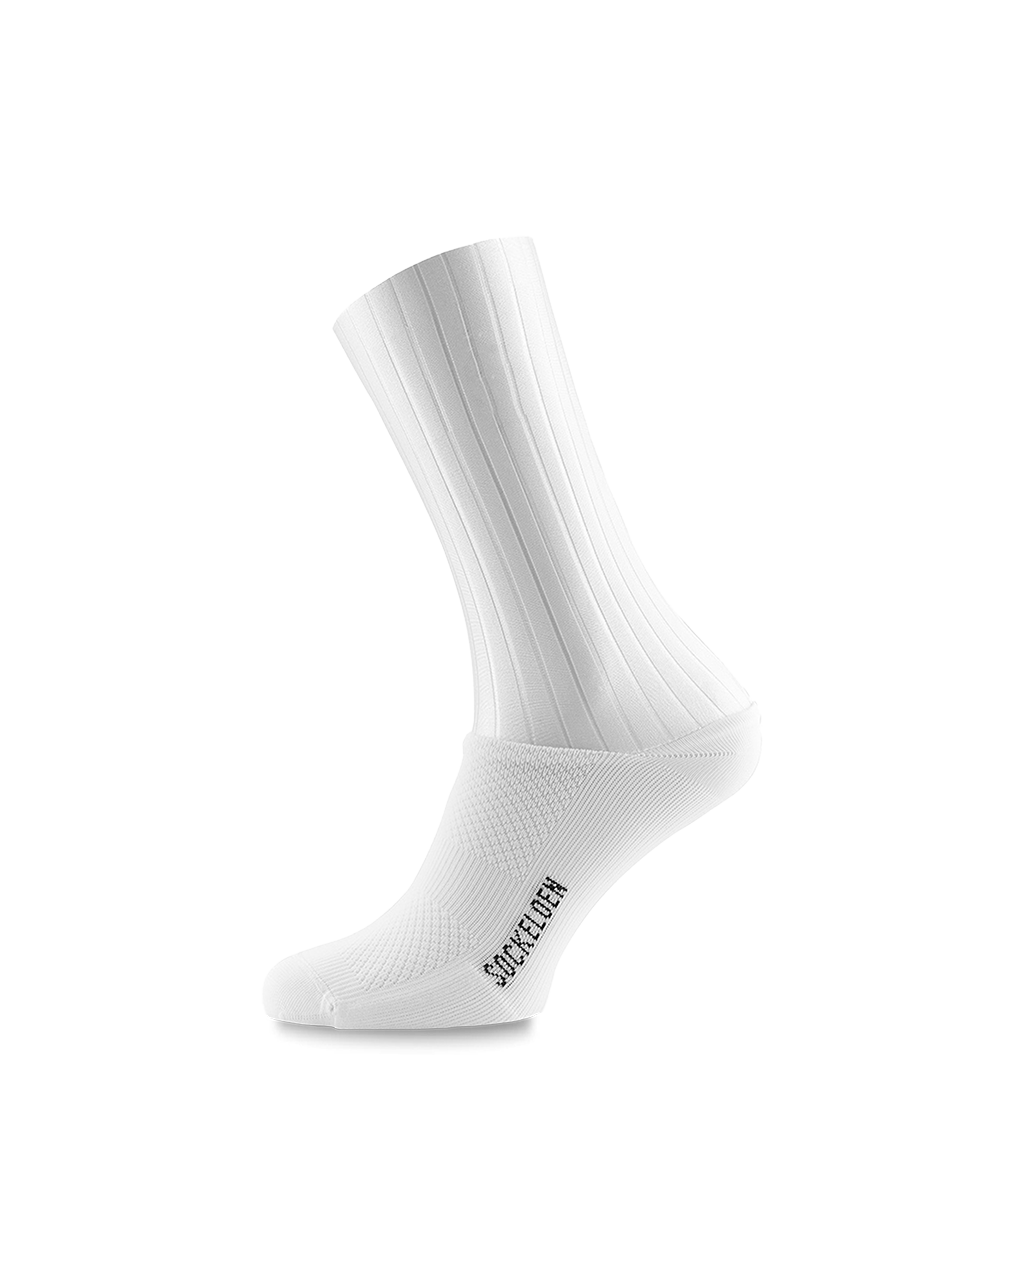 Aero sock all white + Element Murk cycling sock